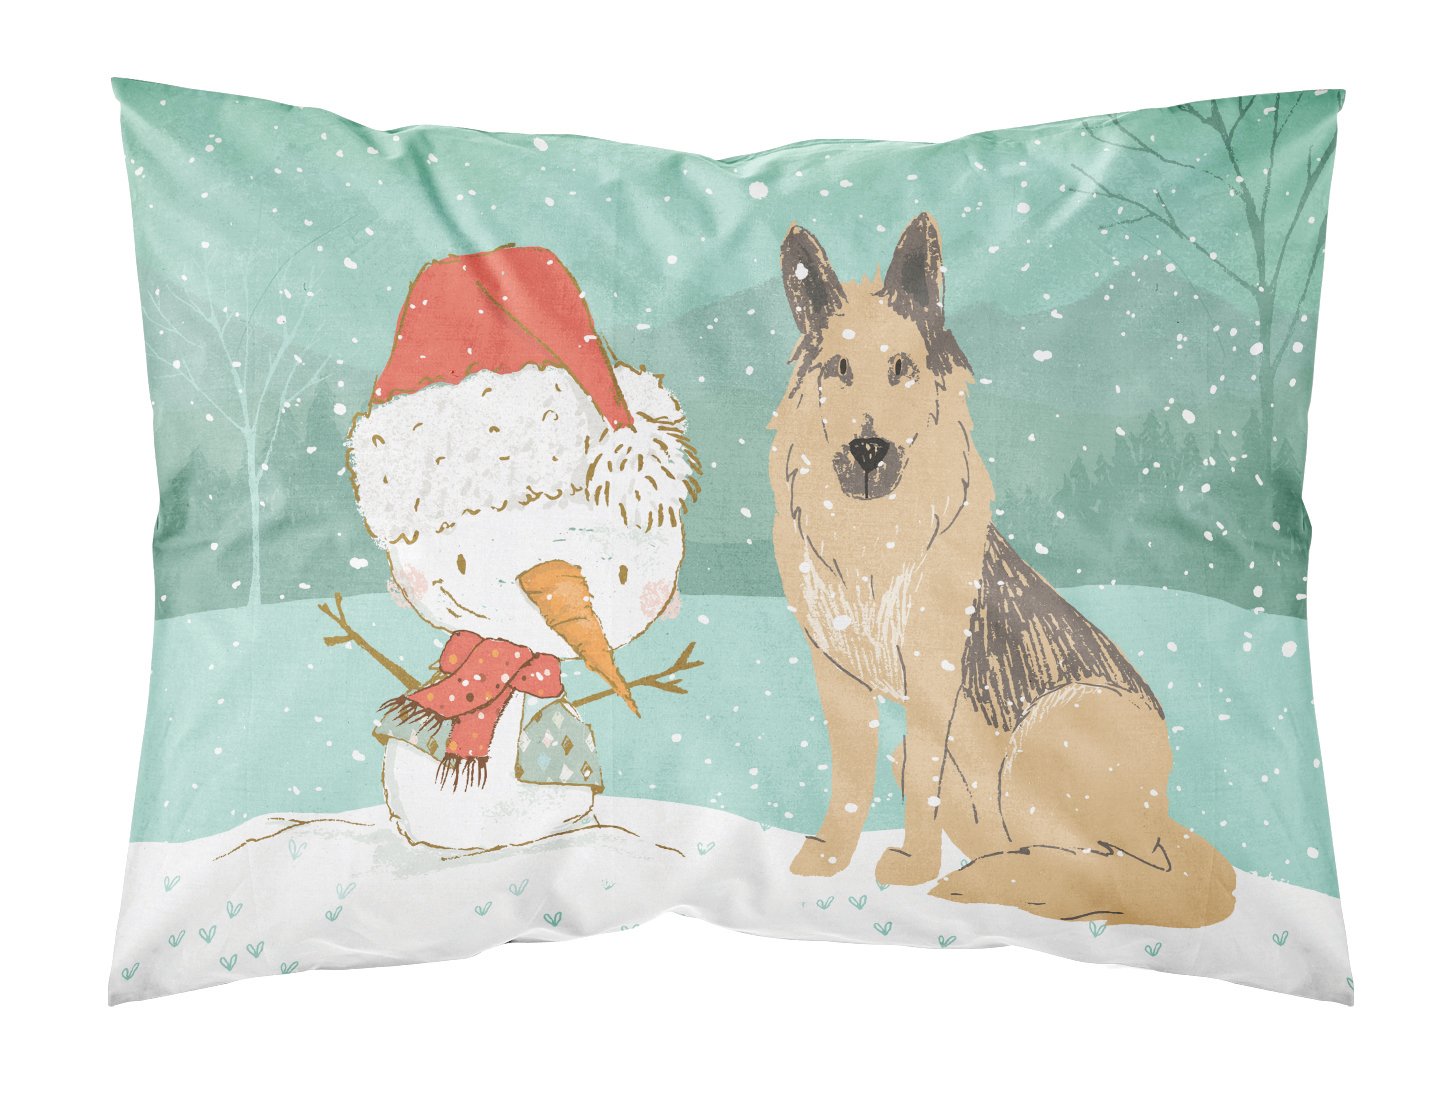 German Shepherd and Snowman Christmas Fabric Standard Pillowcase CK2033PILLOWCASE by Caroline's Treasures